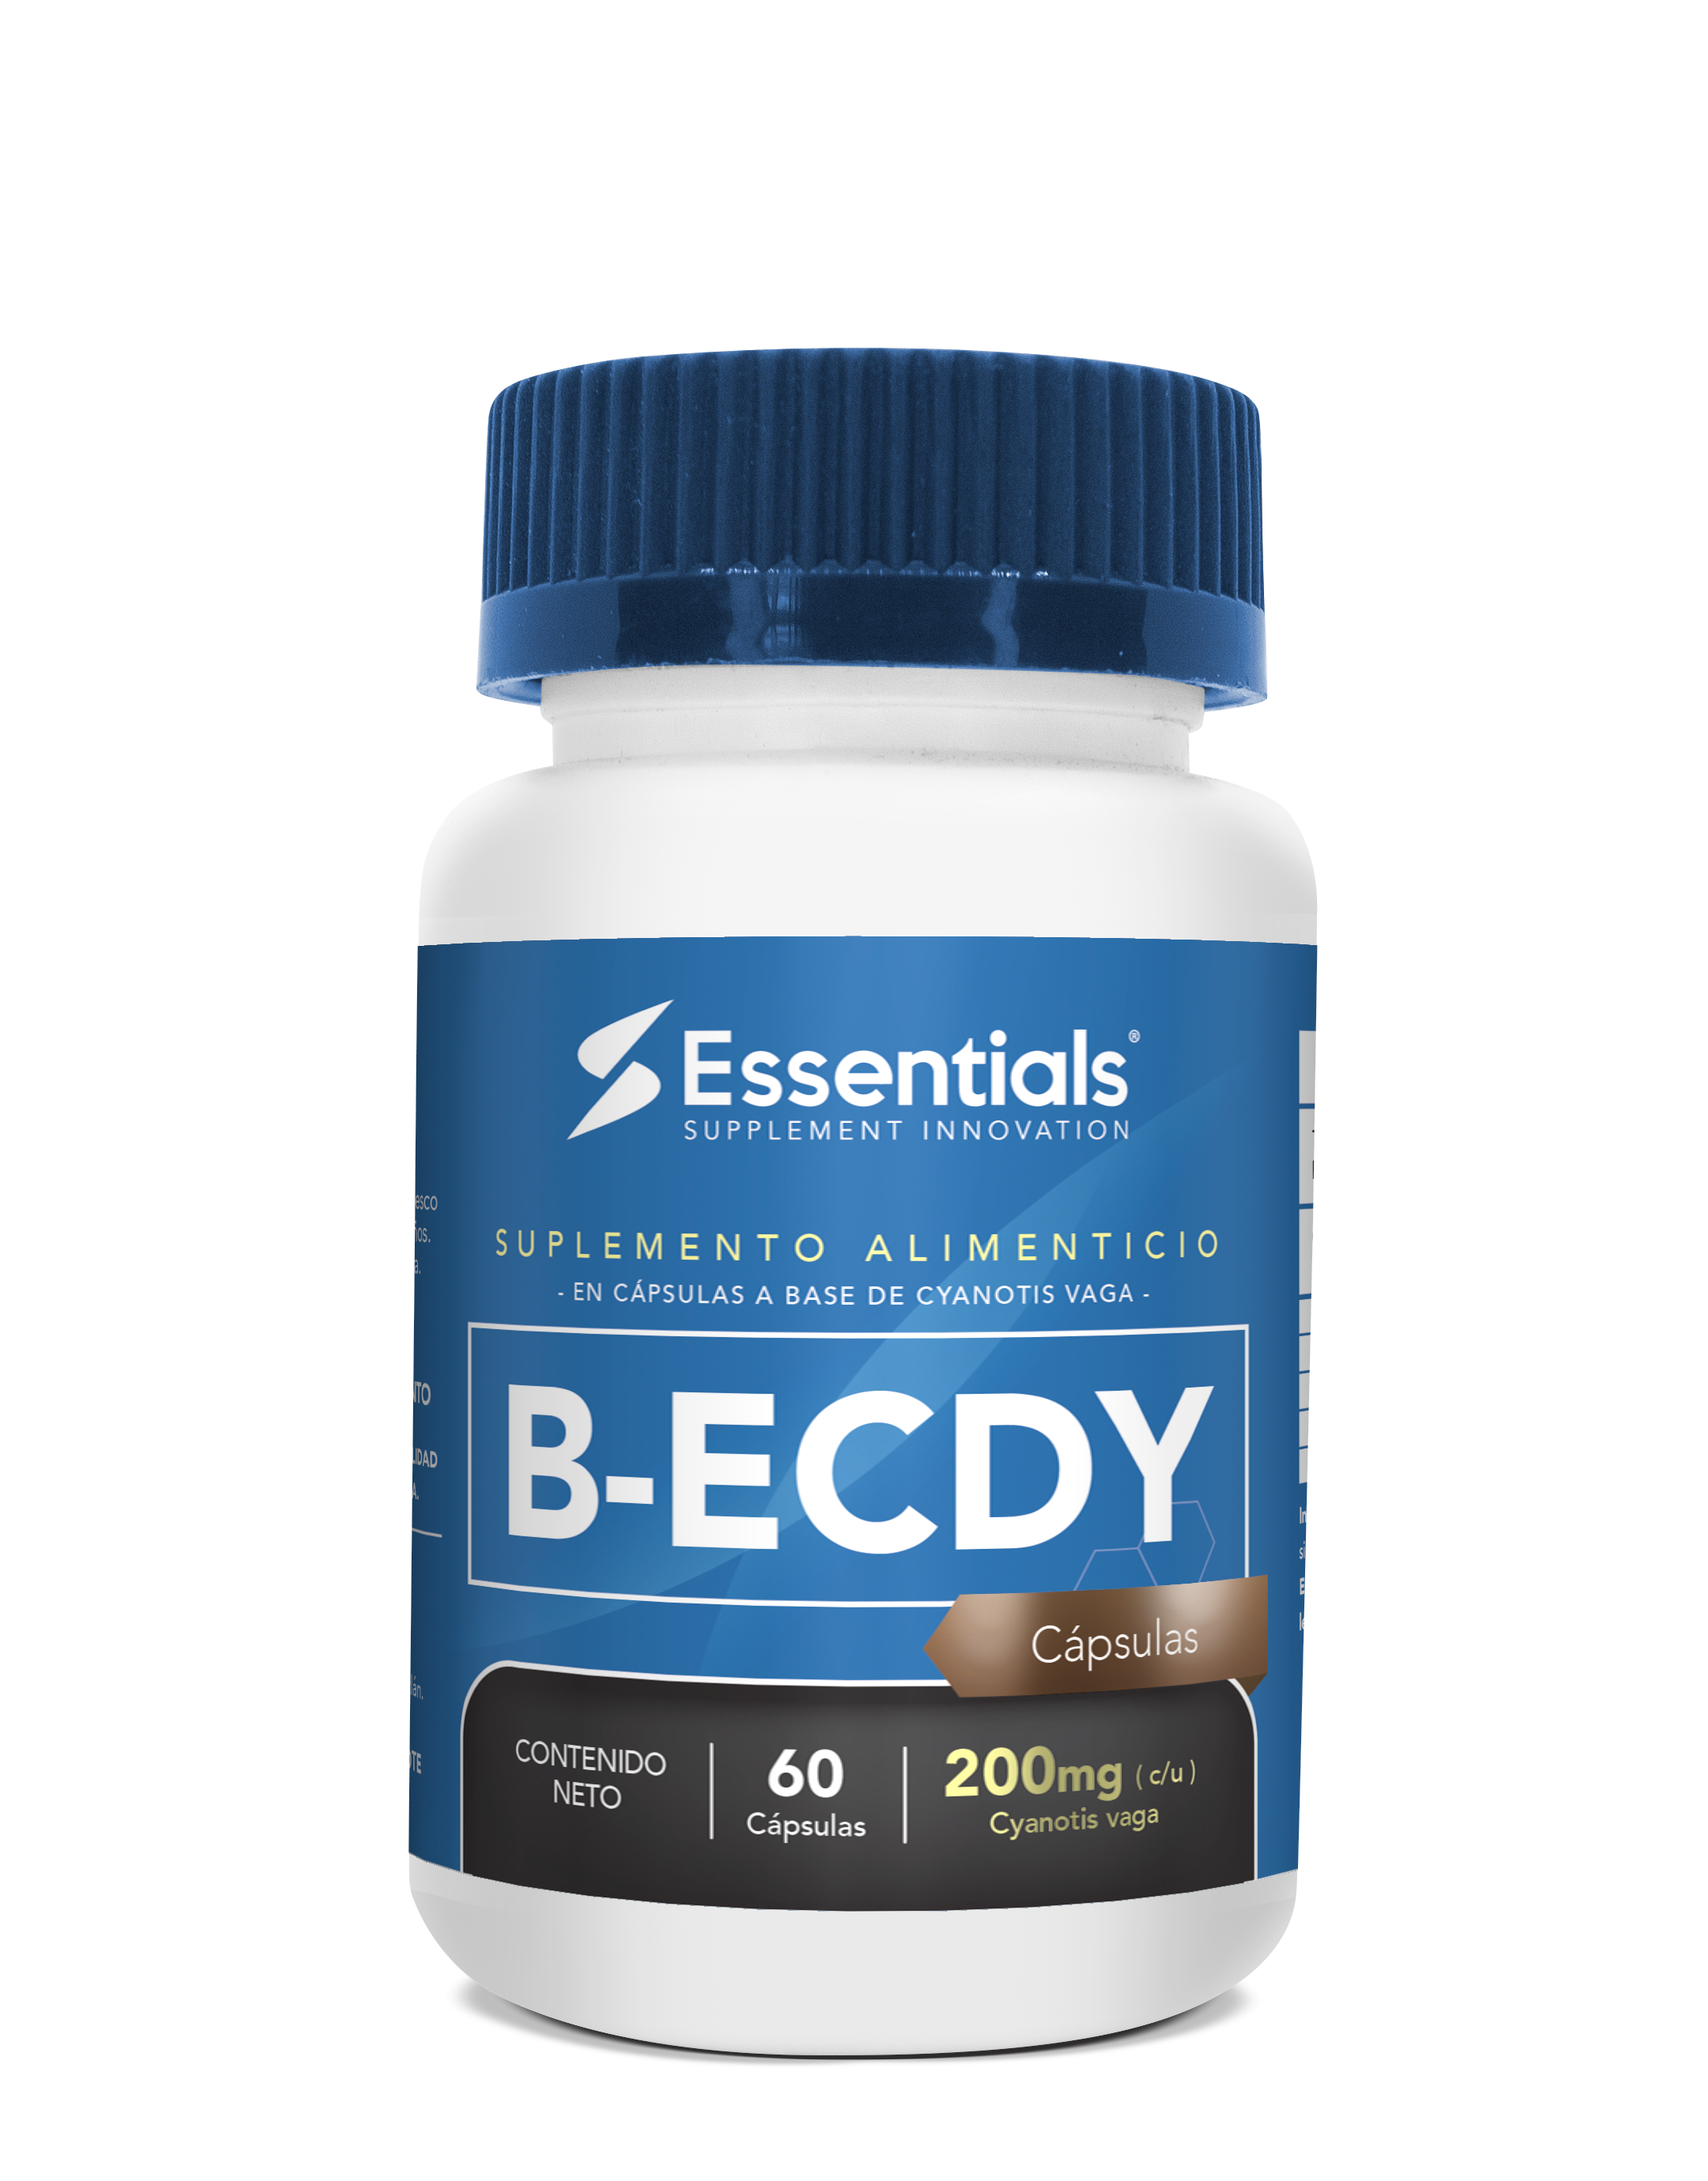 B-Ecdysterone 90% 200mg - 60 capsulas